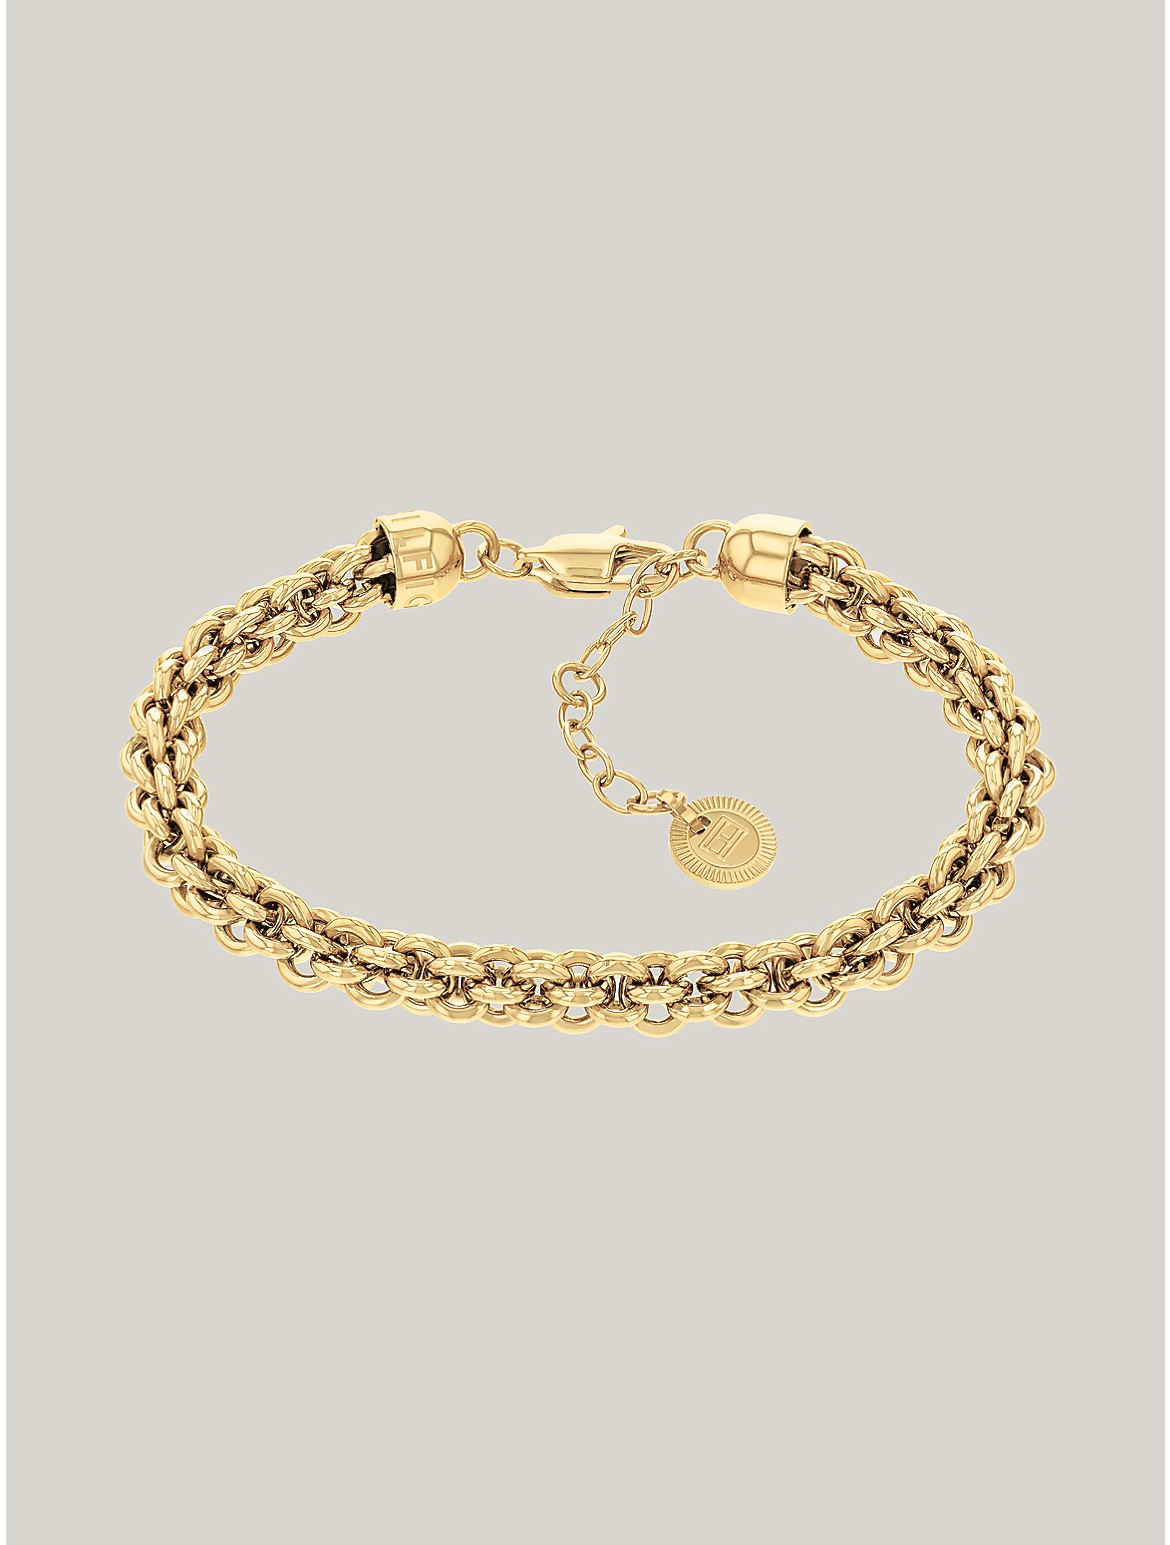 Tommy Hilfiger Women's Gold-Tone Intertwined Chain Bracelet - Metallic